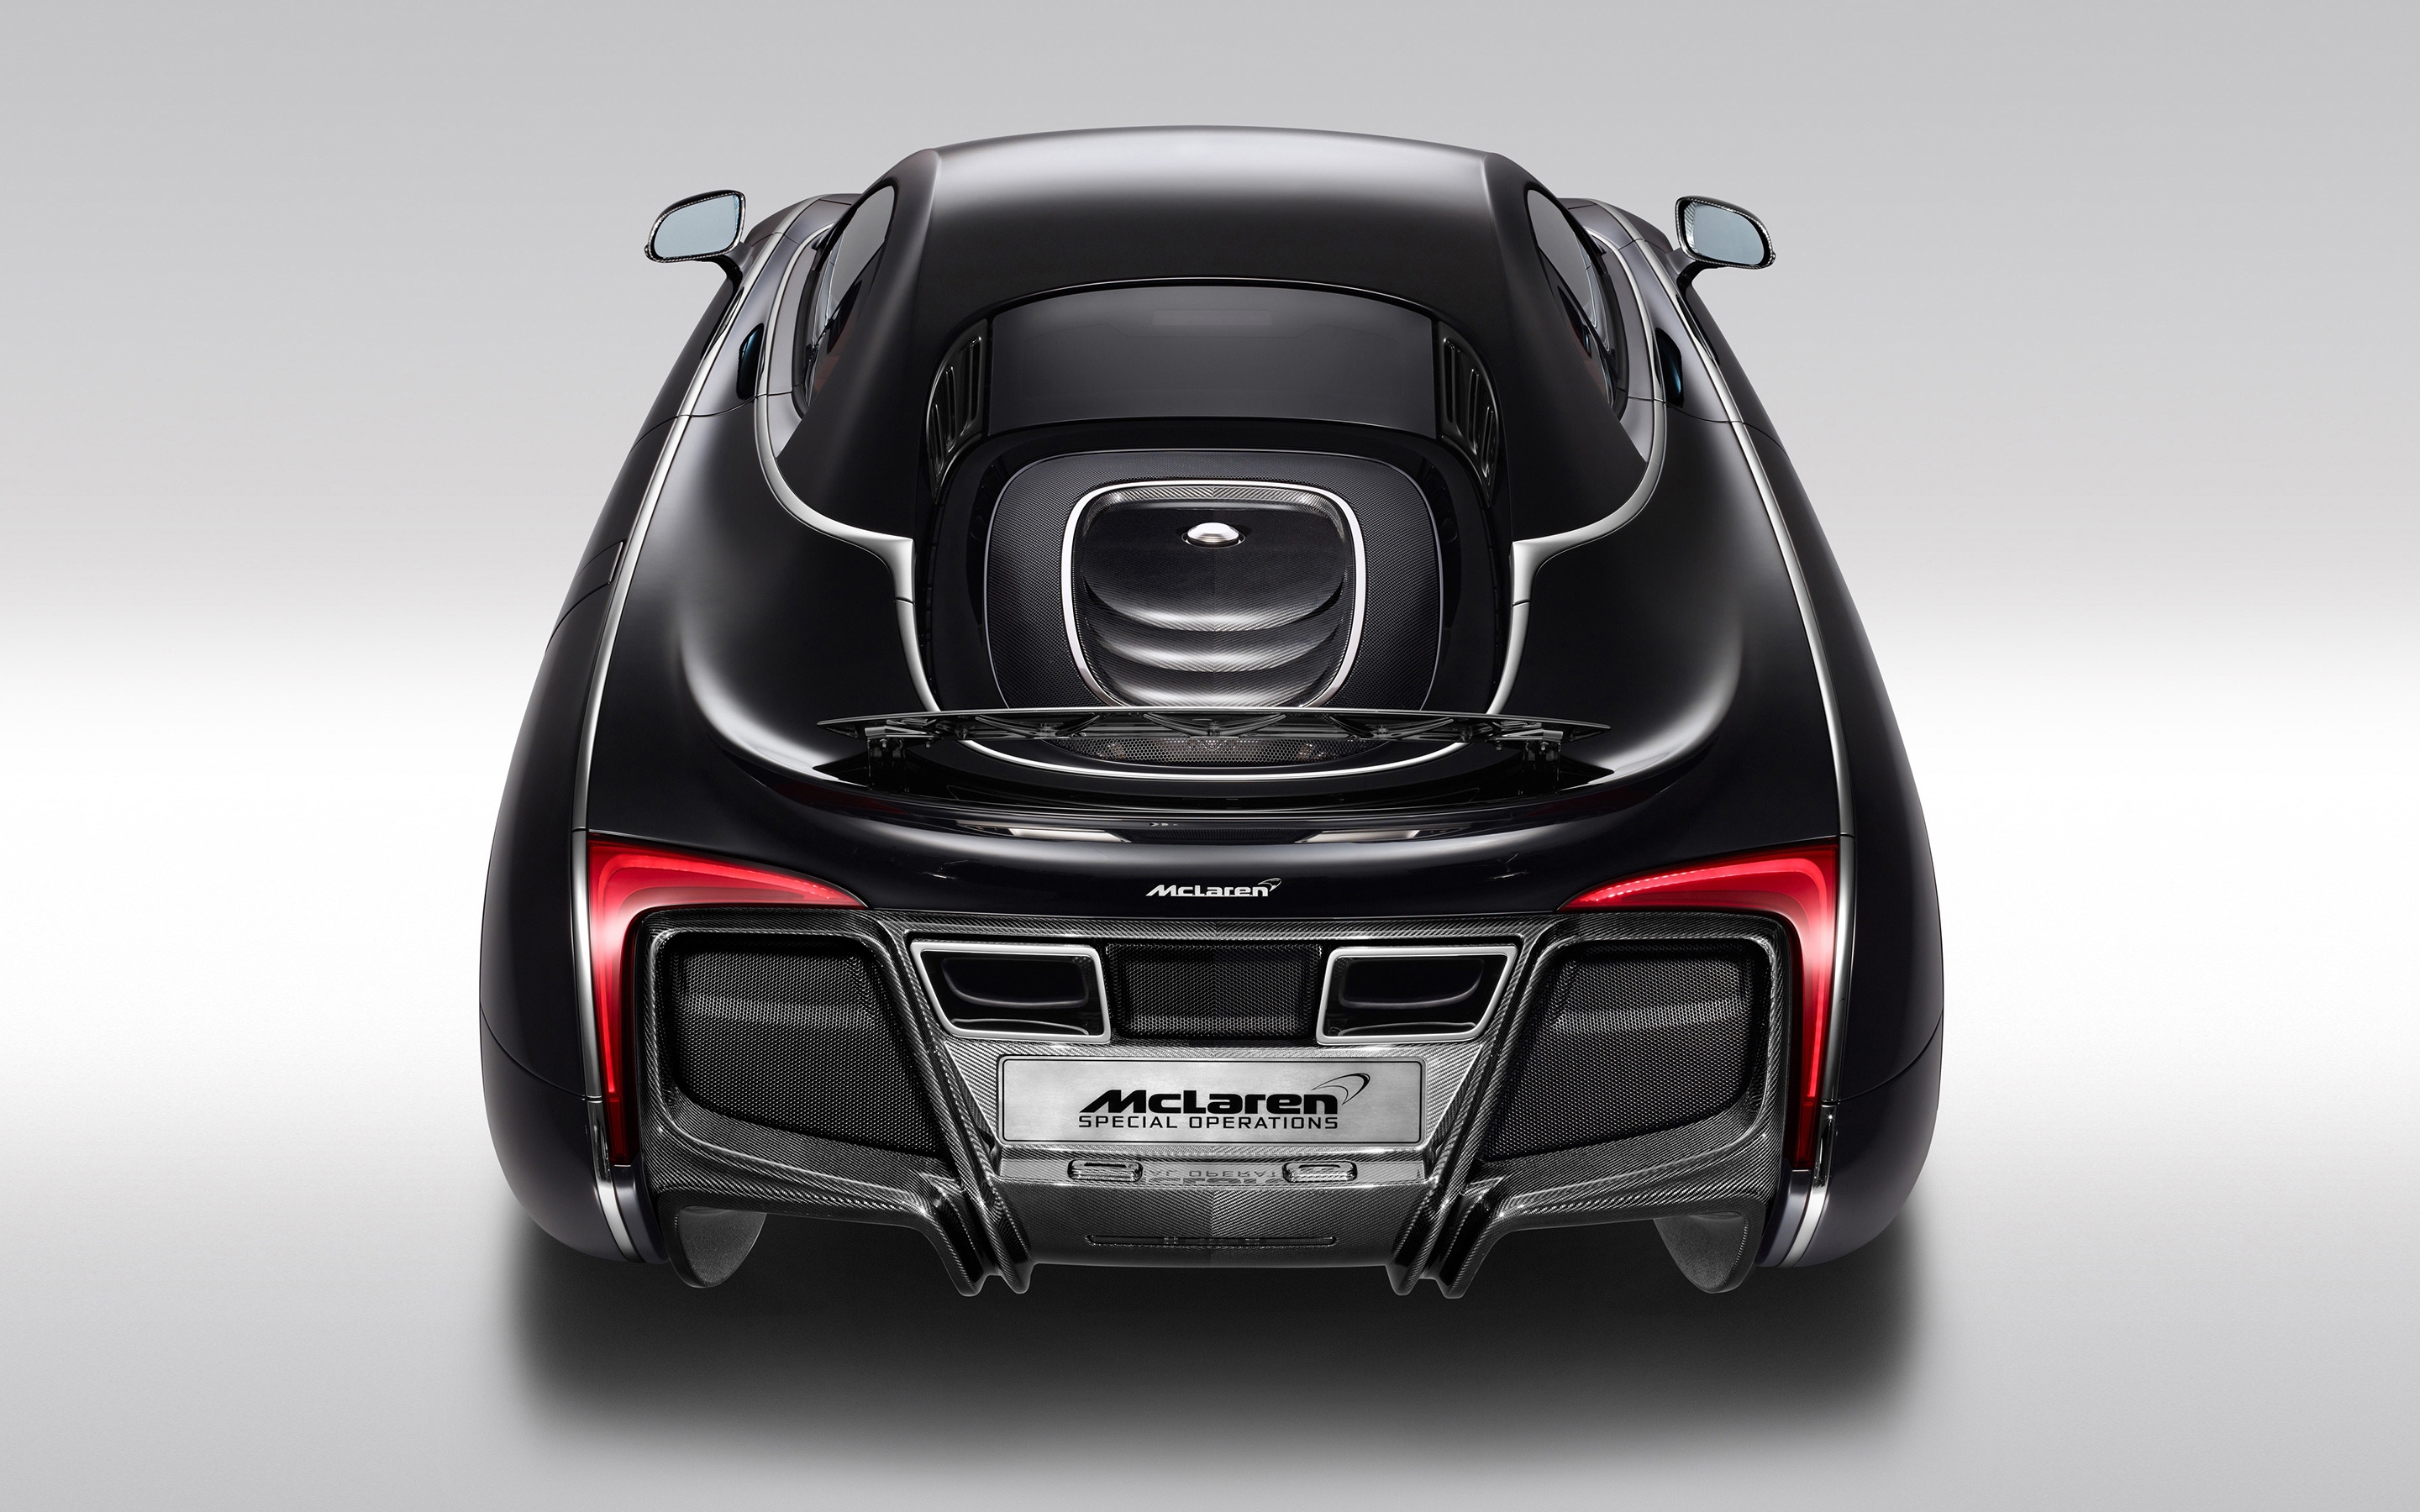 McLaren X1 Concept Rear for 2880 x 1800 Retina Display resolution